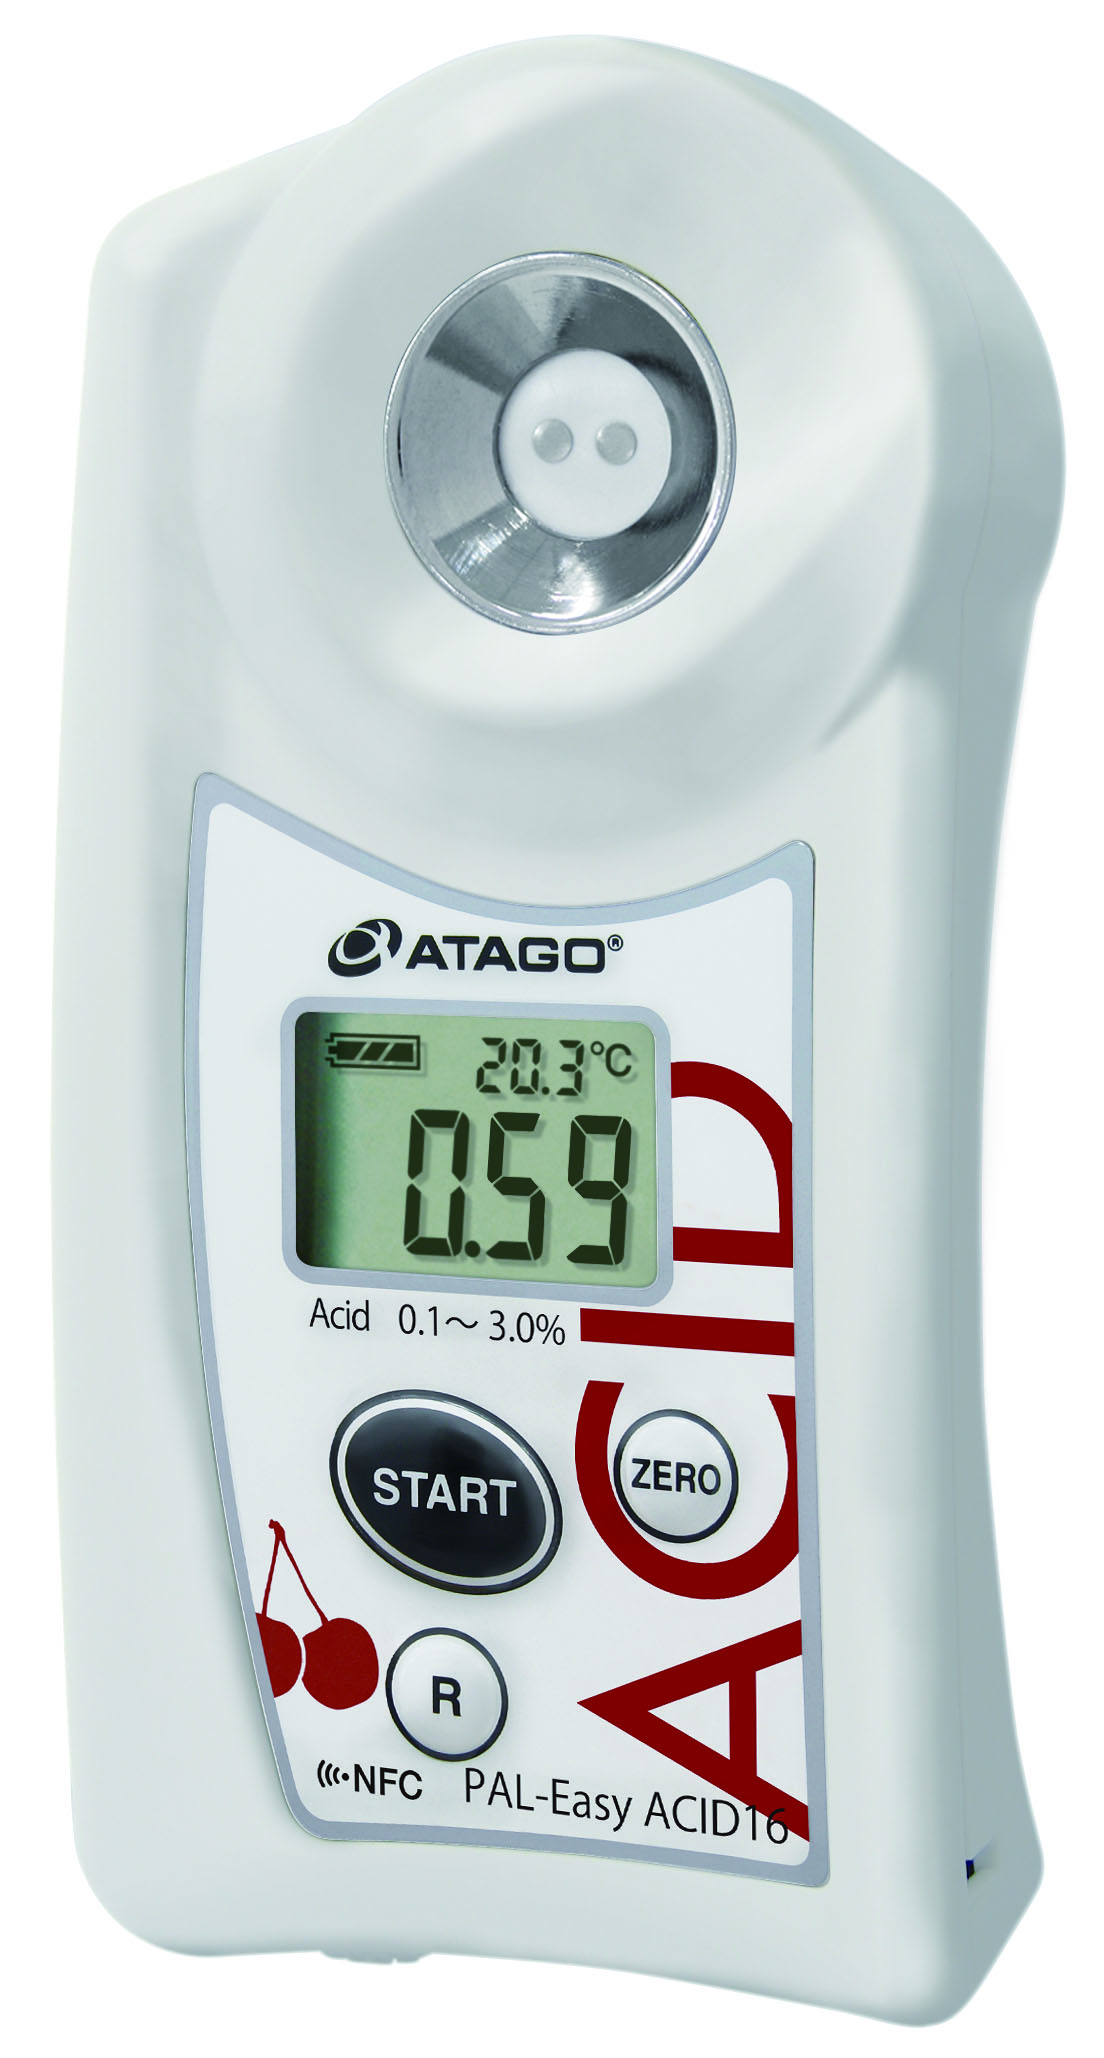 Atago 7316 Pocket Acidity Meter PAL-Easy ACID16 Master Kit for Cherry, Acid : 0.10～3.00％ Measurement Range